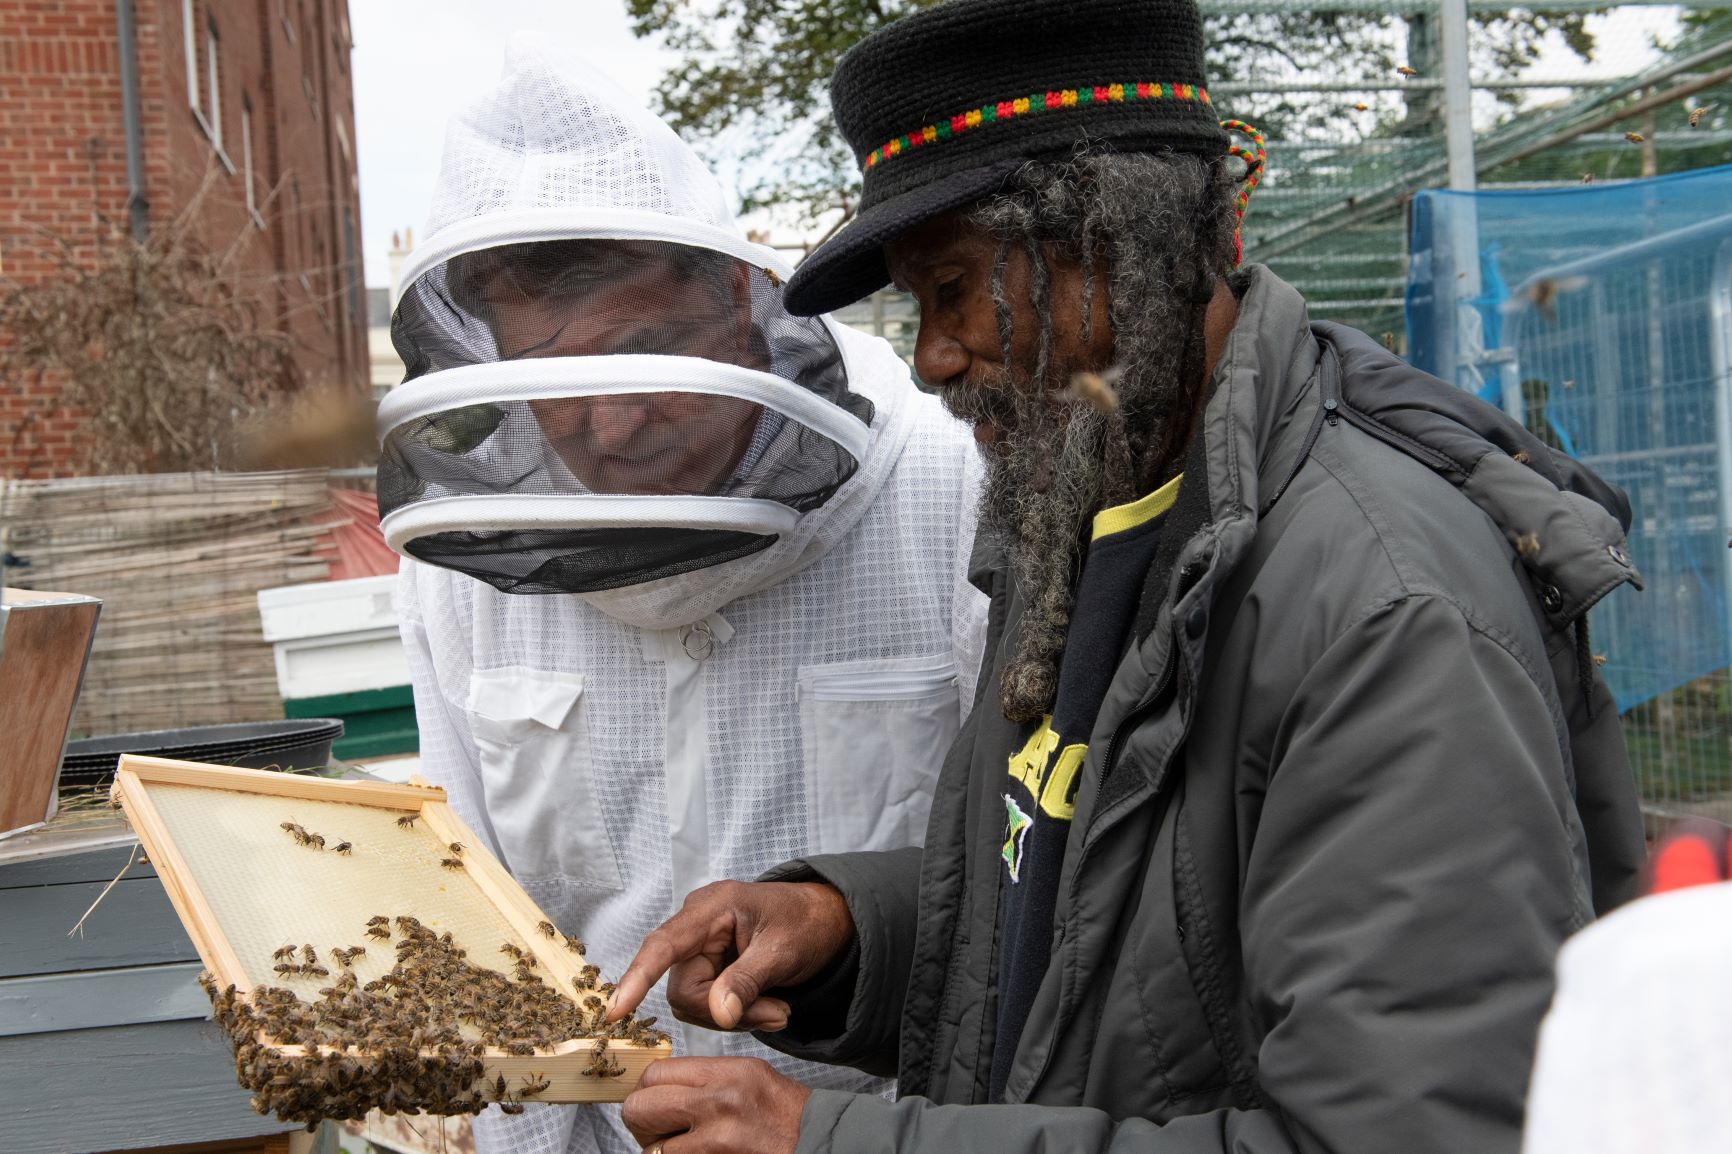 Mayor Steve Rotheram looks inside a beehive with beekeeper Barry.